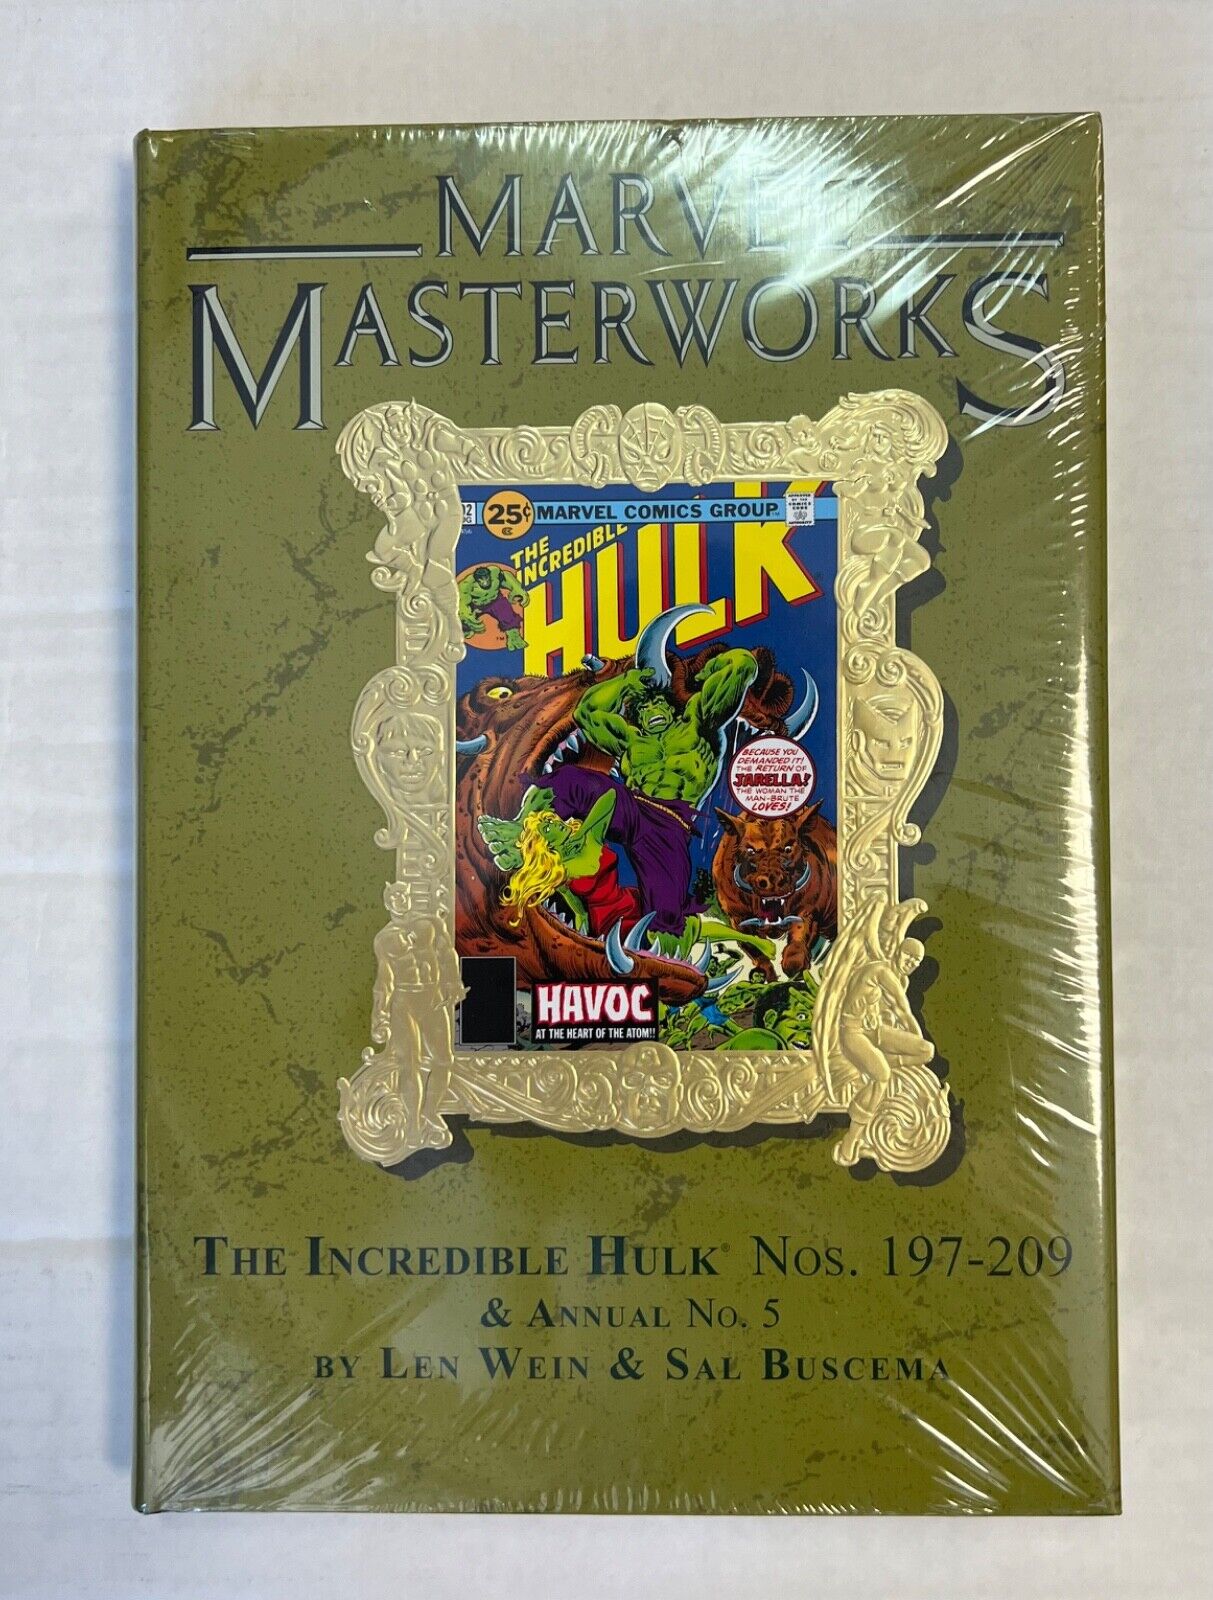 Marvel Masterworks Incredible Hulk SEALED HC DM # 263 651 copies printed RARE